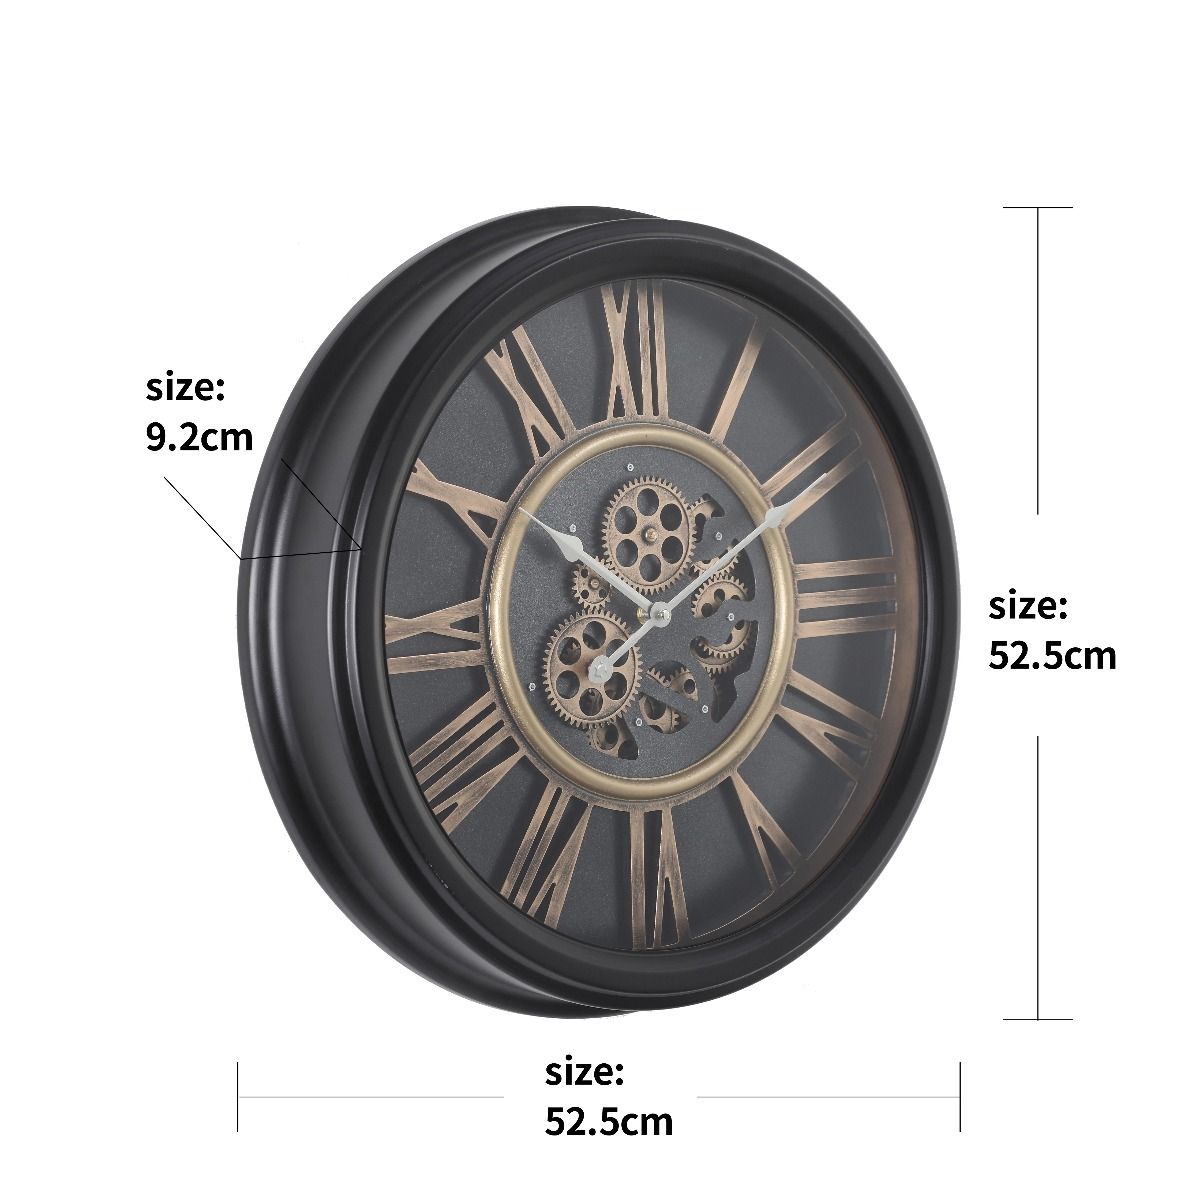 Industrial/vintage-inspired clock range - MODEL 08